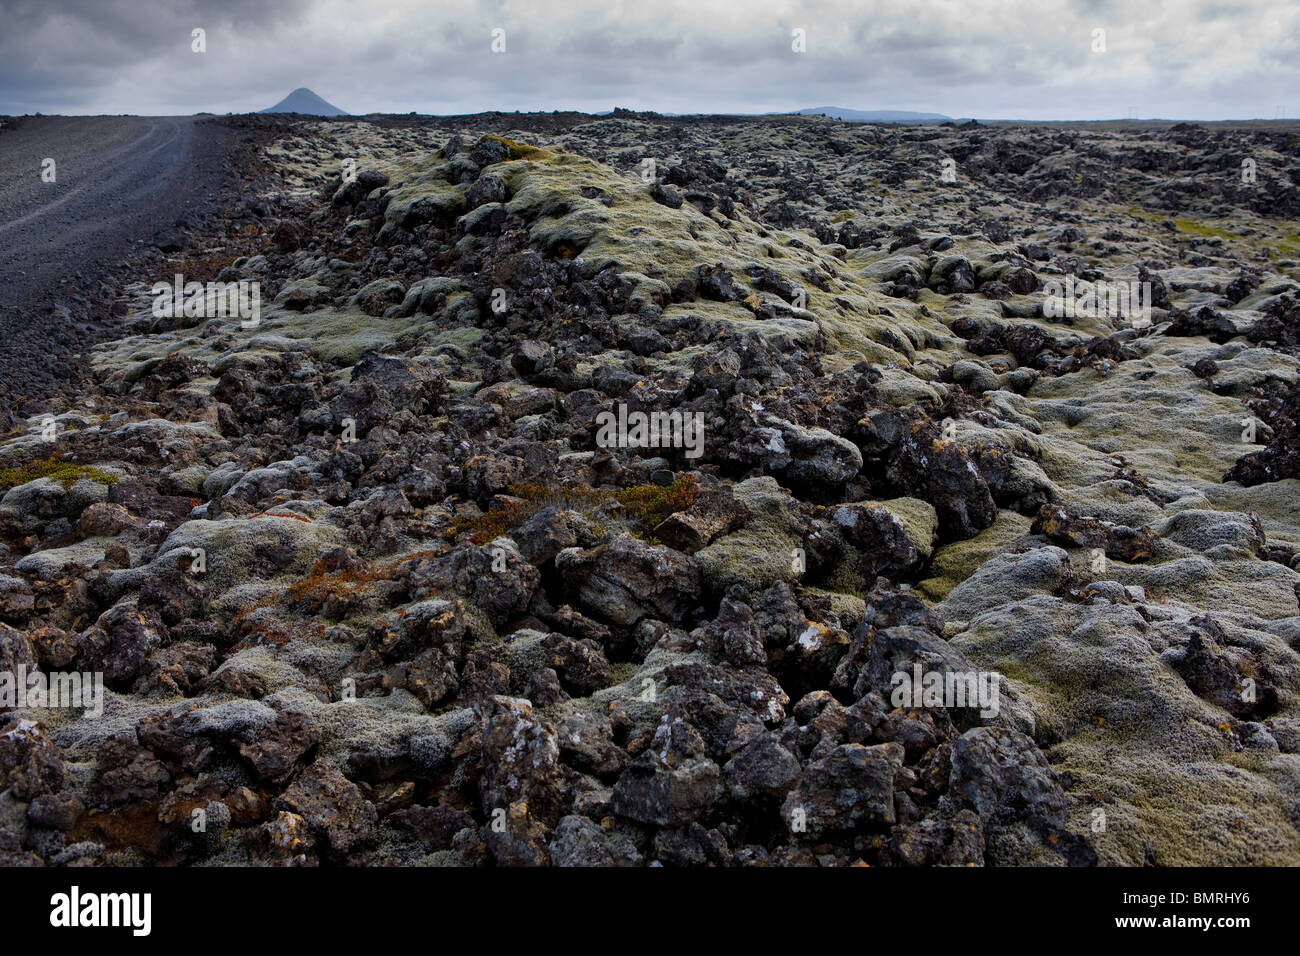 Near Keflavik International Airport on the Reykjanes peninsula, is a dramatic lunar type lava landscape. Stock Photo